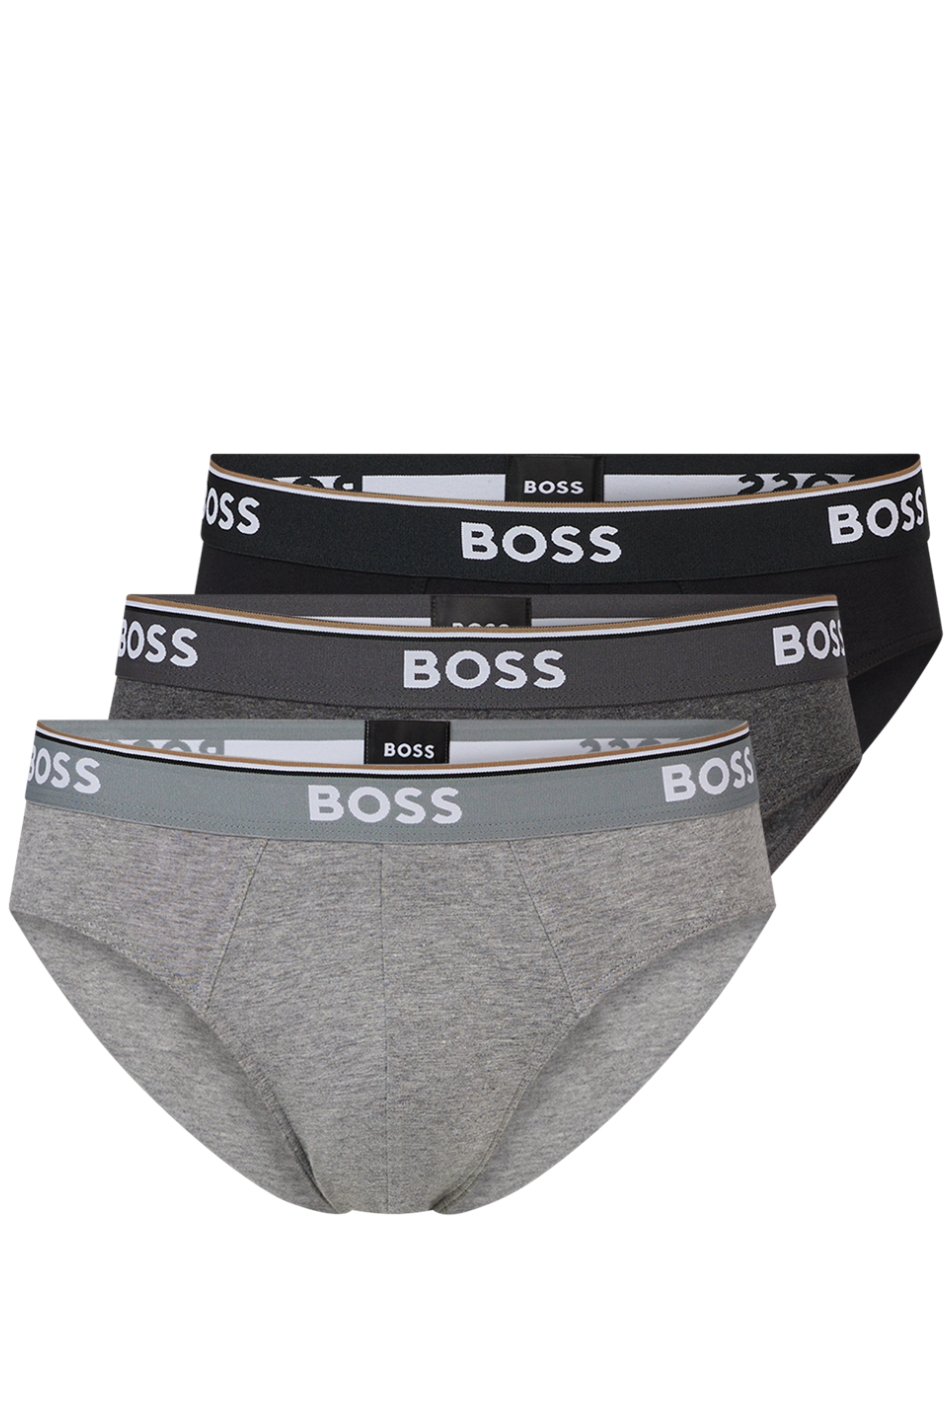 Boss 3 Pack Men's Brief